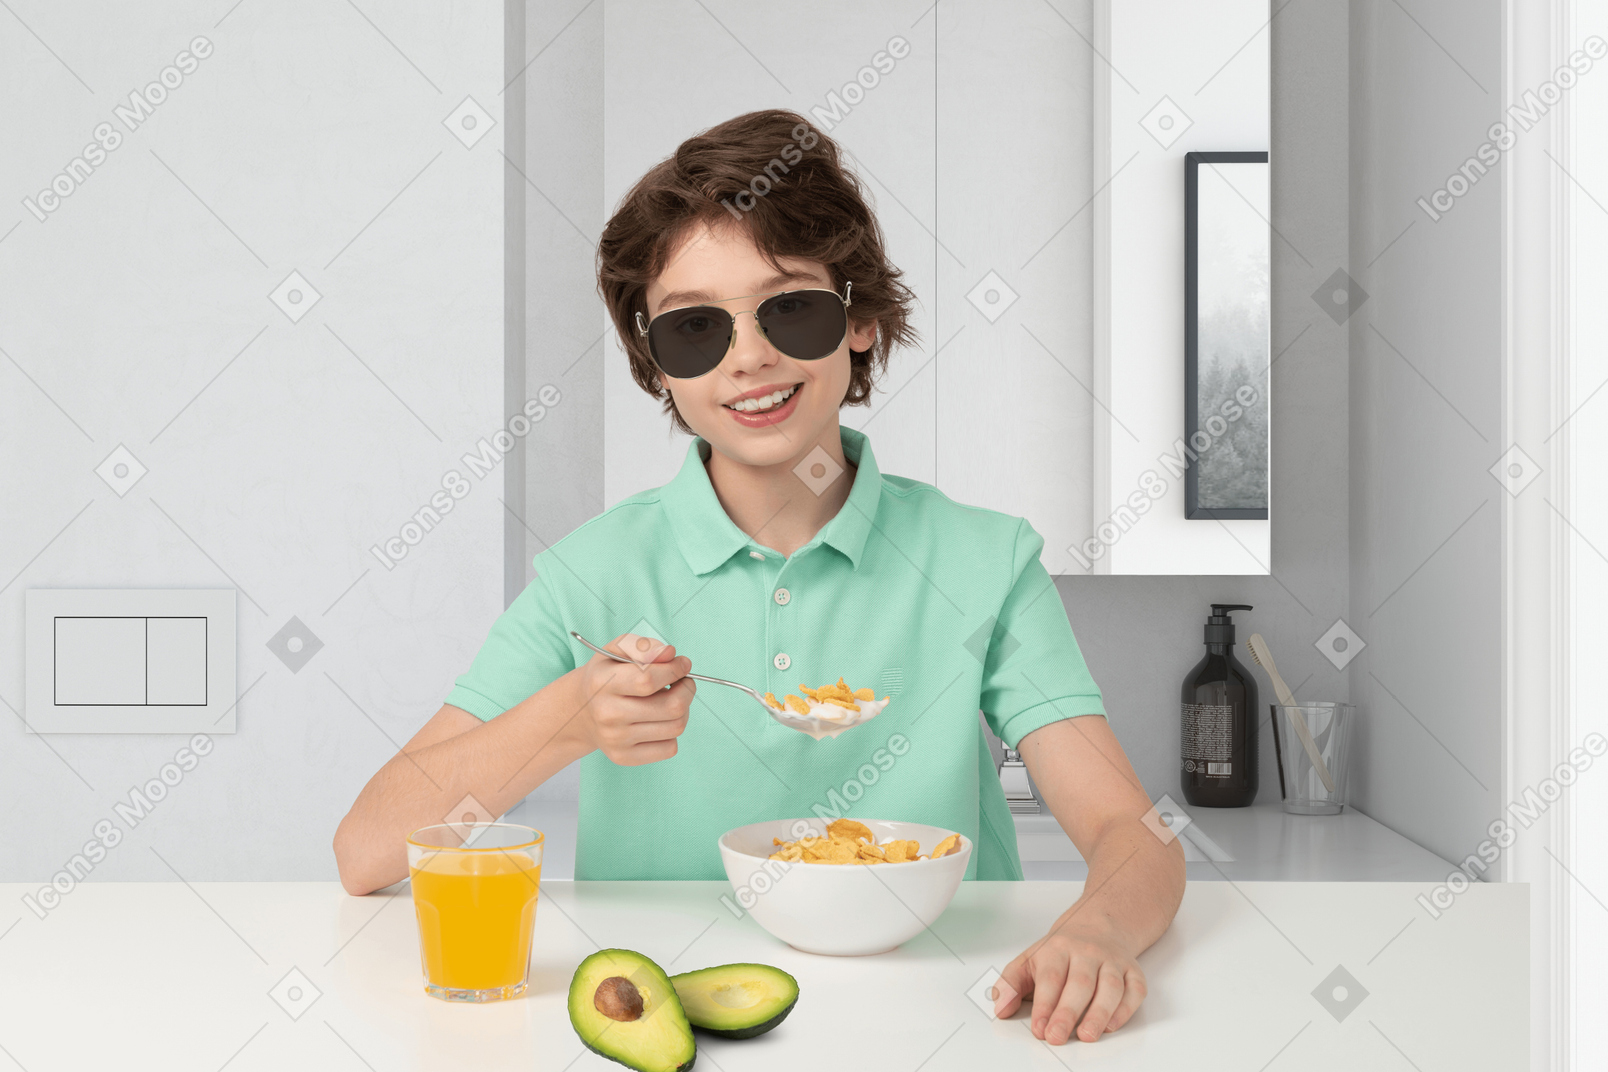 Boy in sunglasses eating breakfast